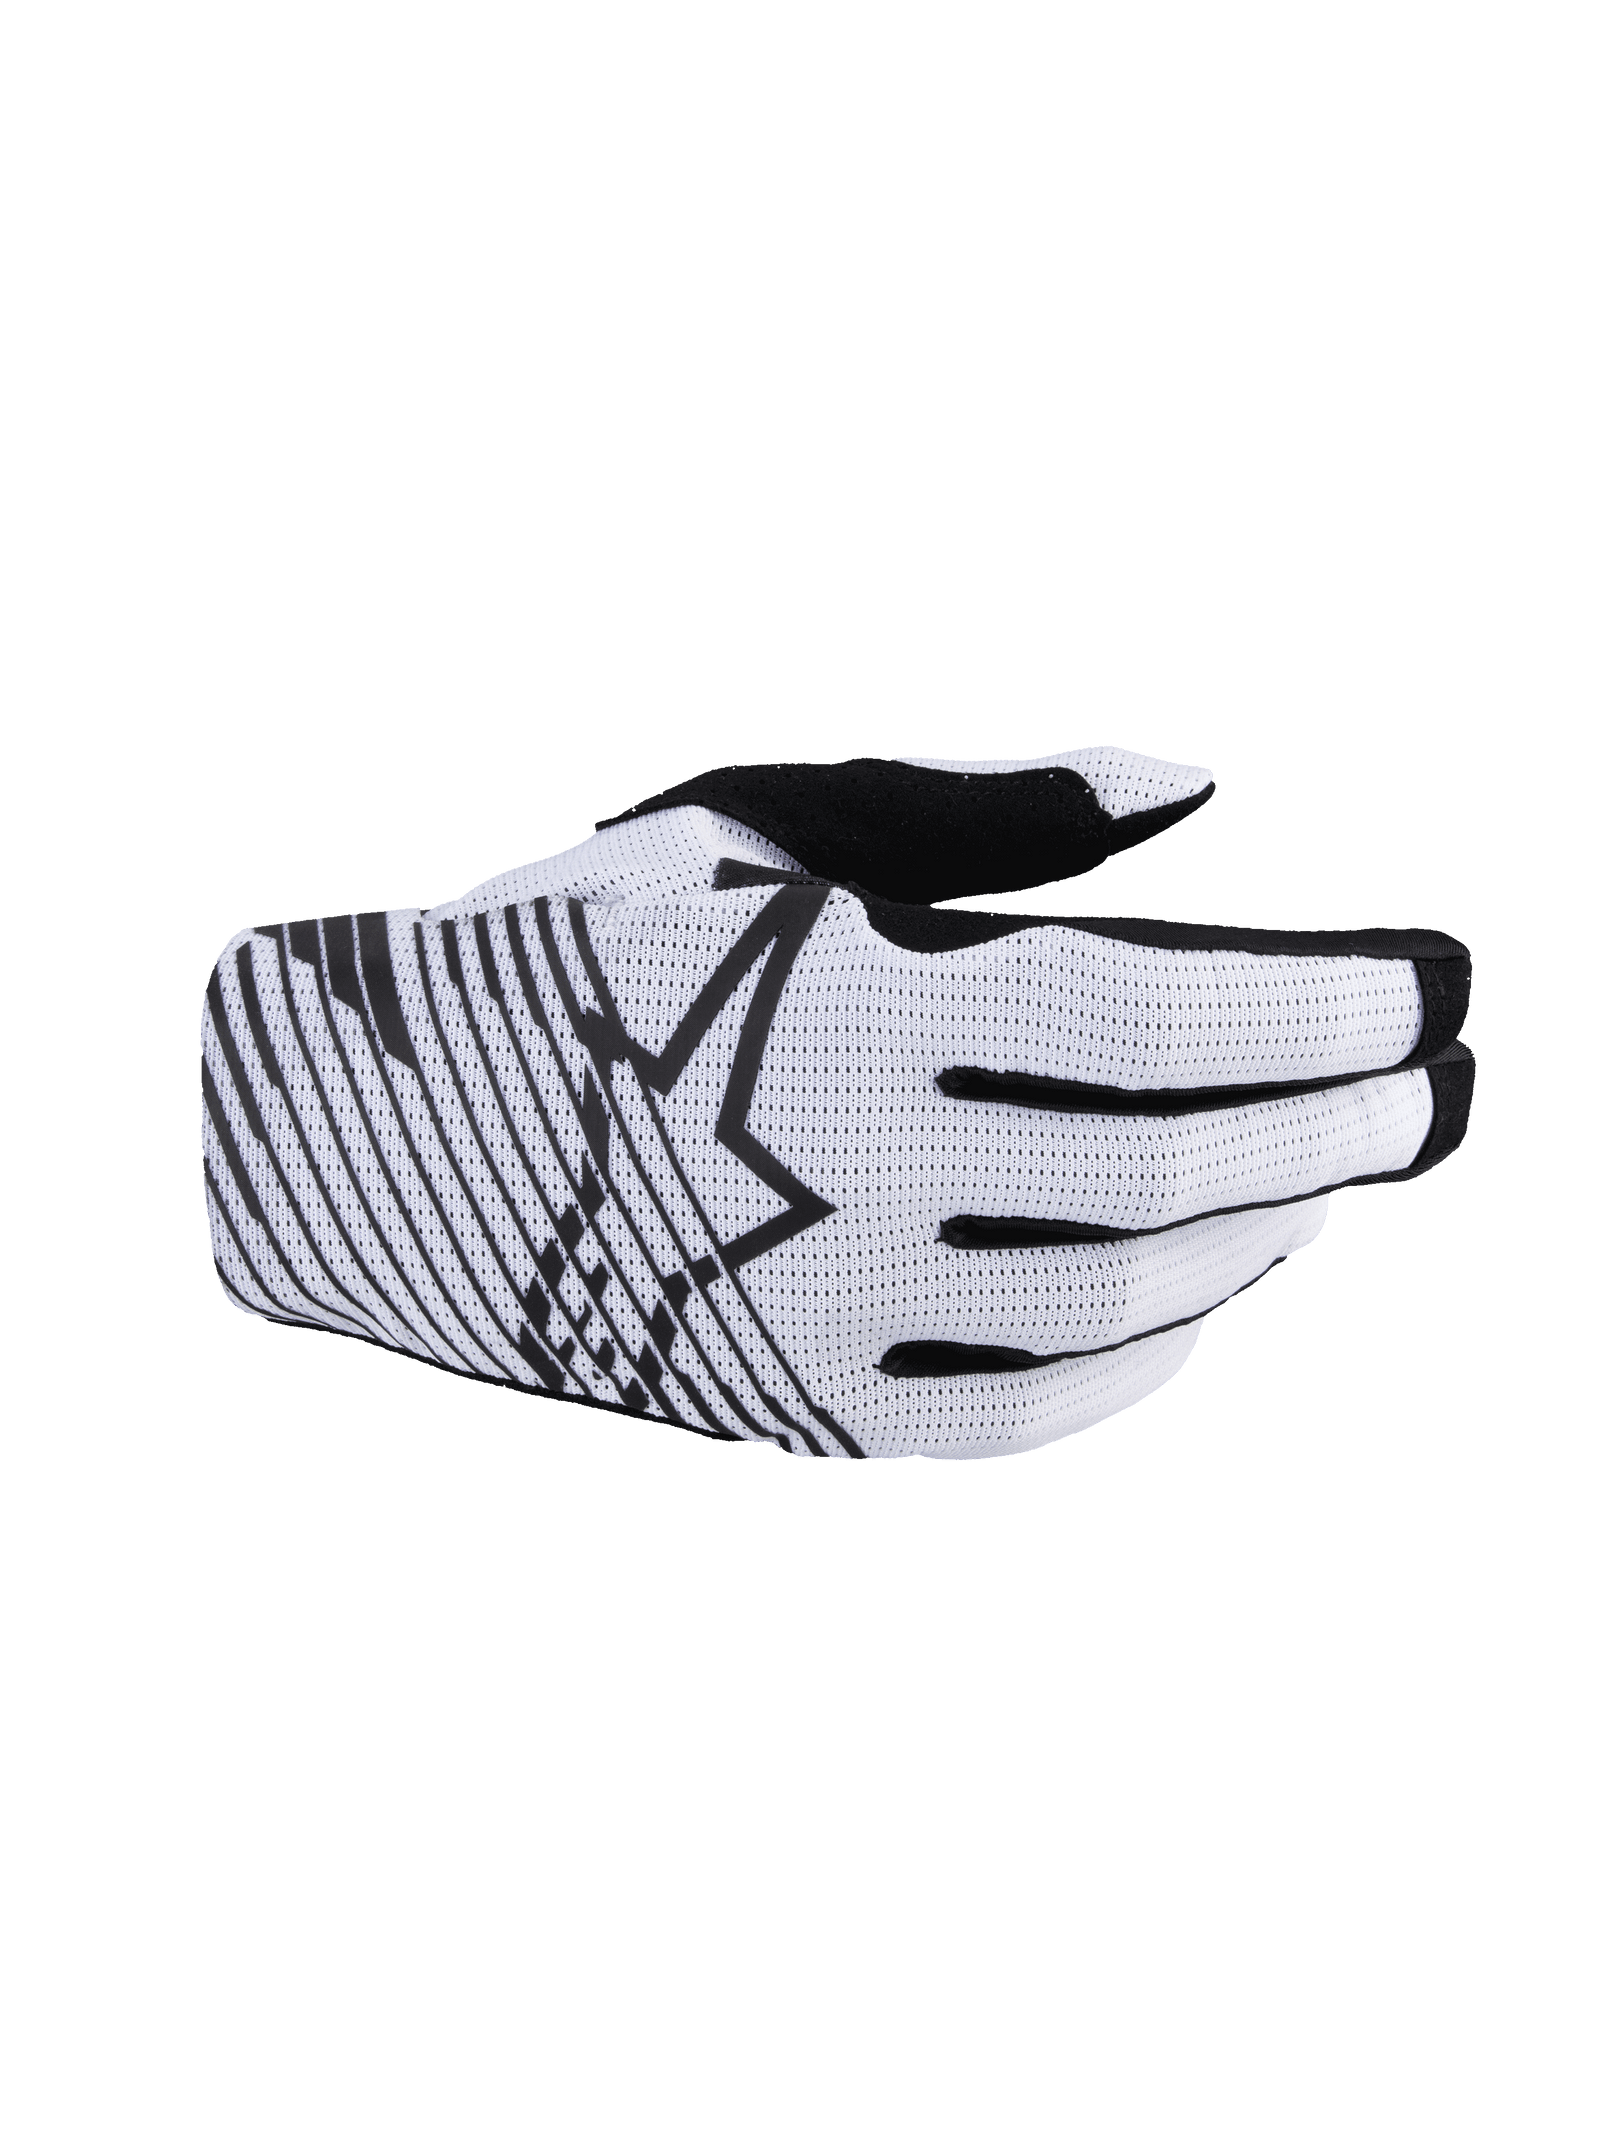 Radar Pro Handschuhe